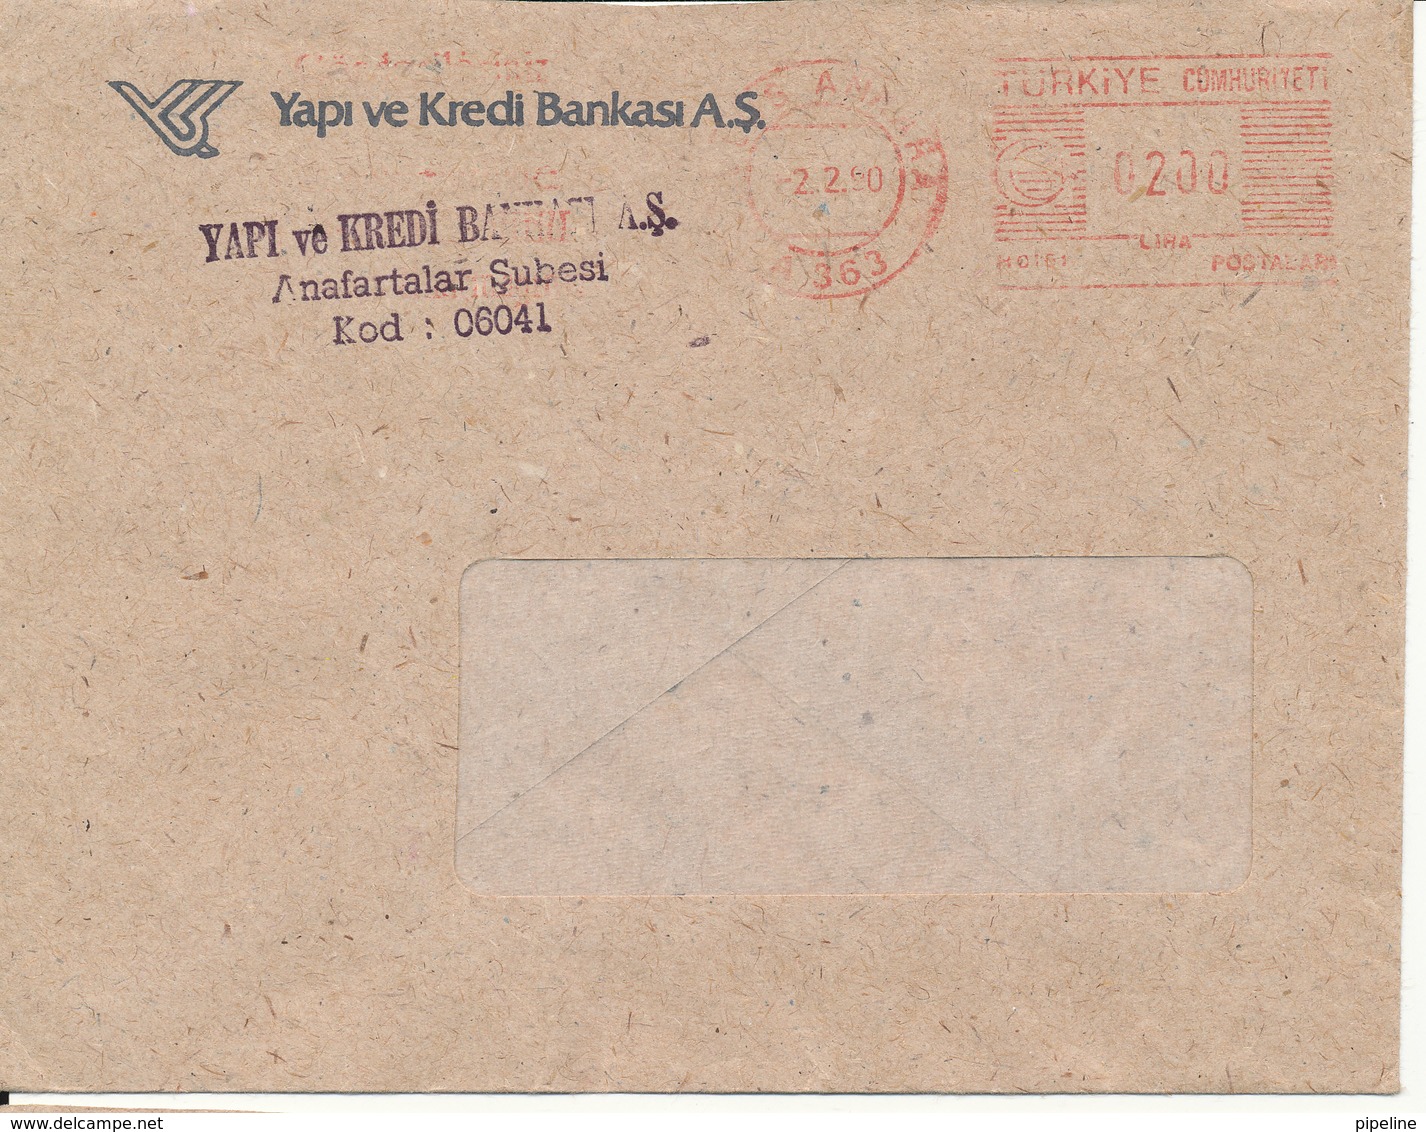 Turkey Bank Cover With Meter Cancel Ulus Ankara 2-2-1990 Yapi Ve Kredi Bankasi A.S.) - Covers & Documents